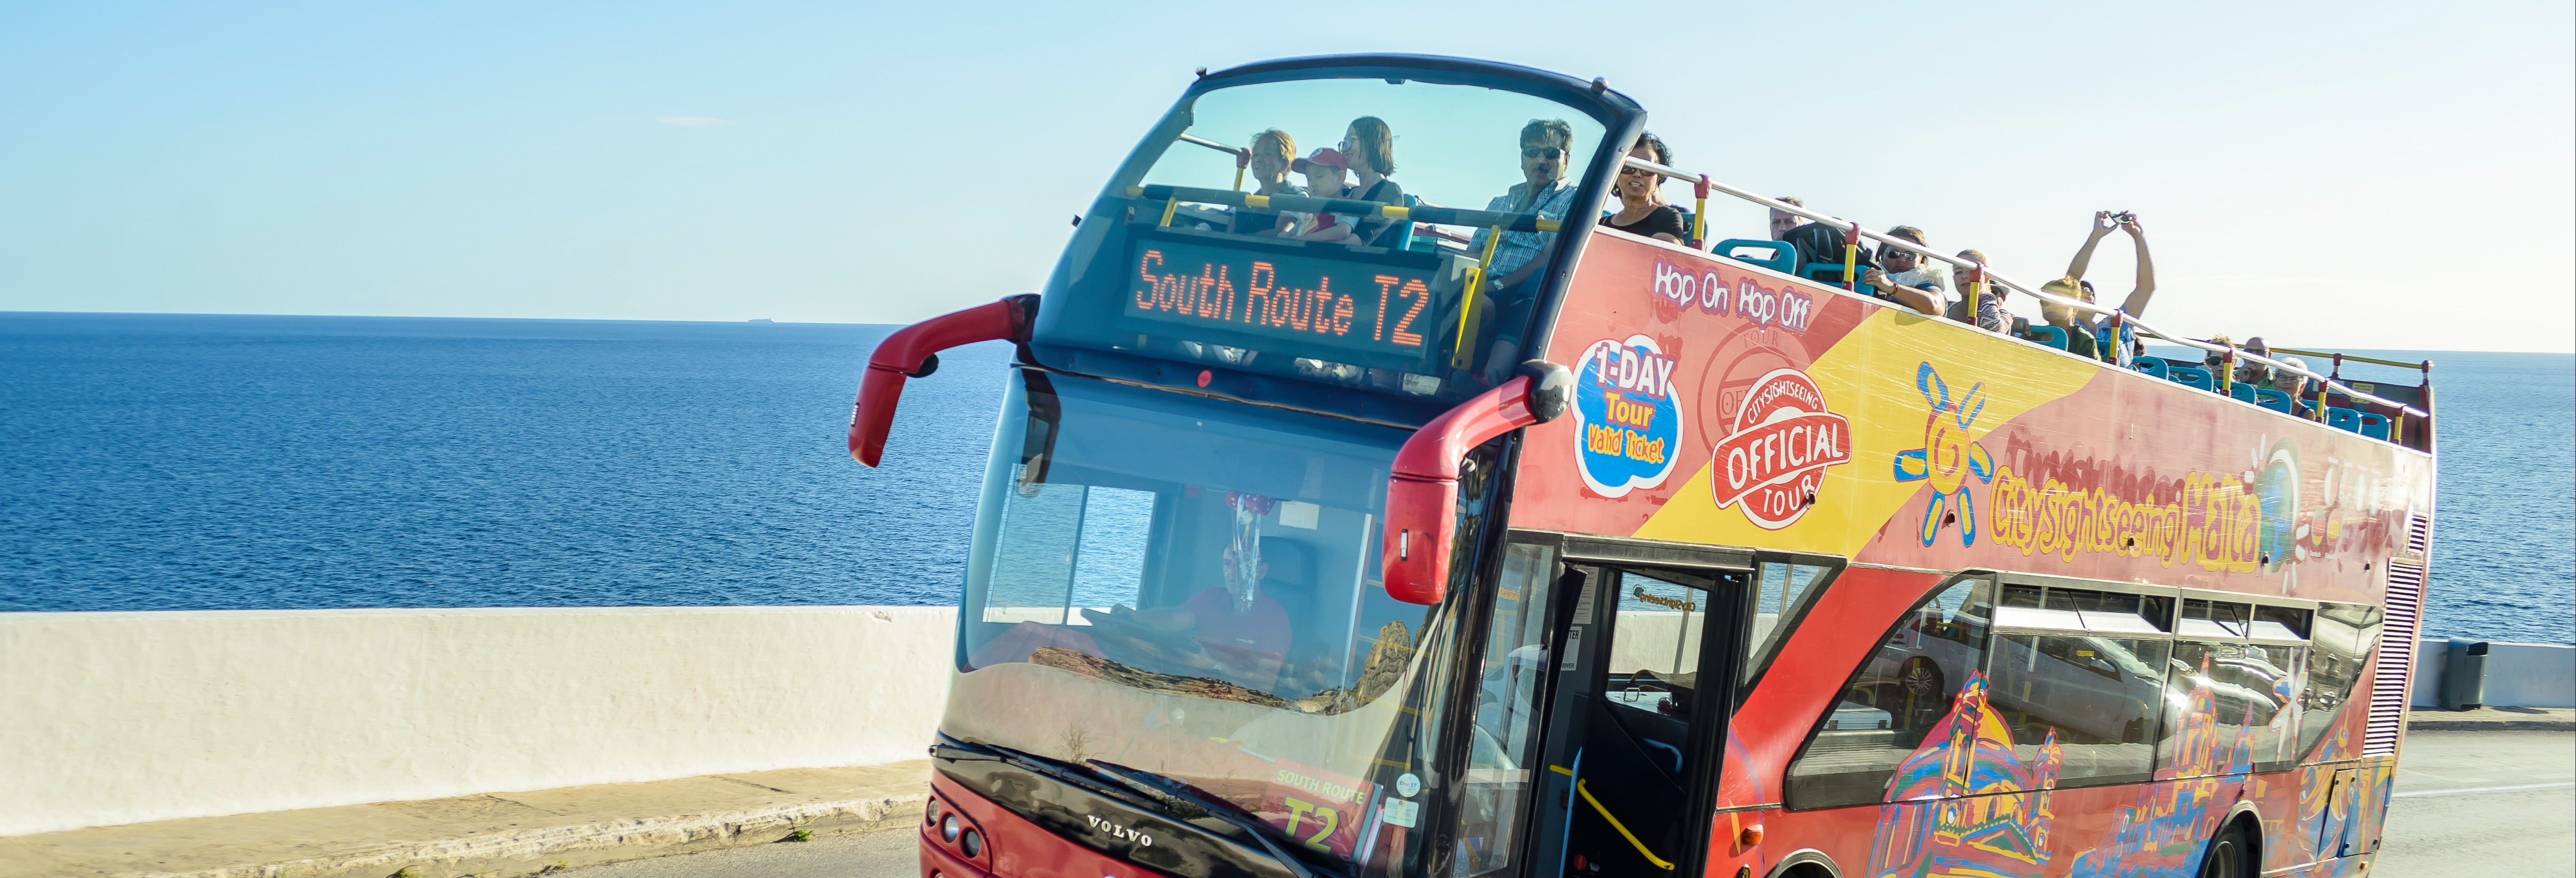 Ônibus turístico de Malta